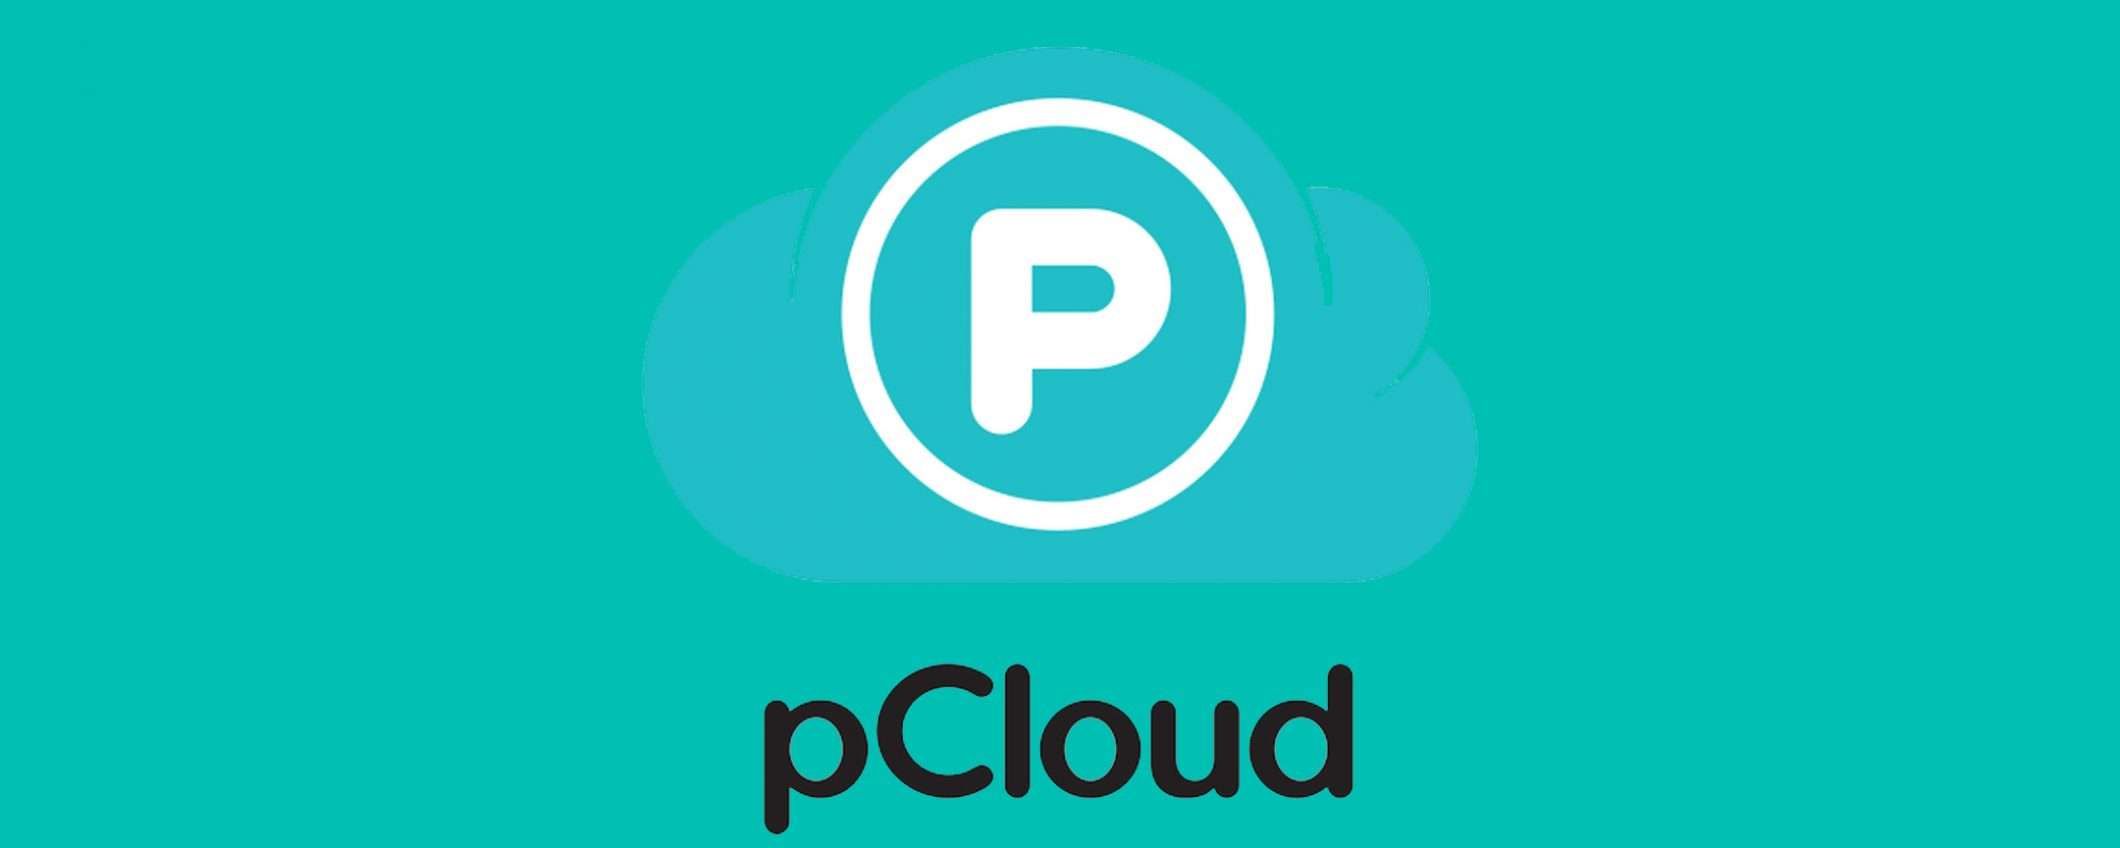 pCloud: cloud storage a vita con lo sconto del 65%